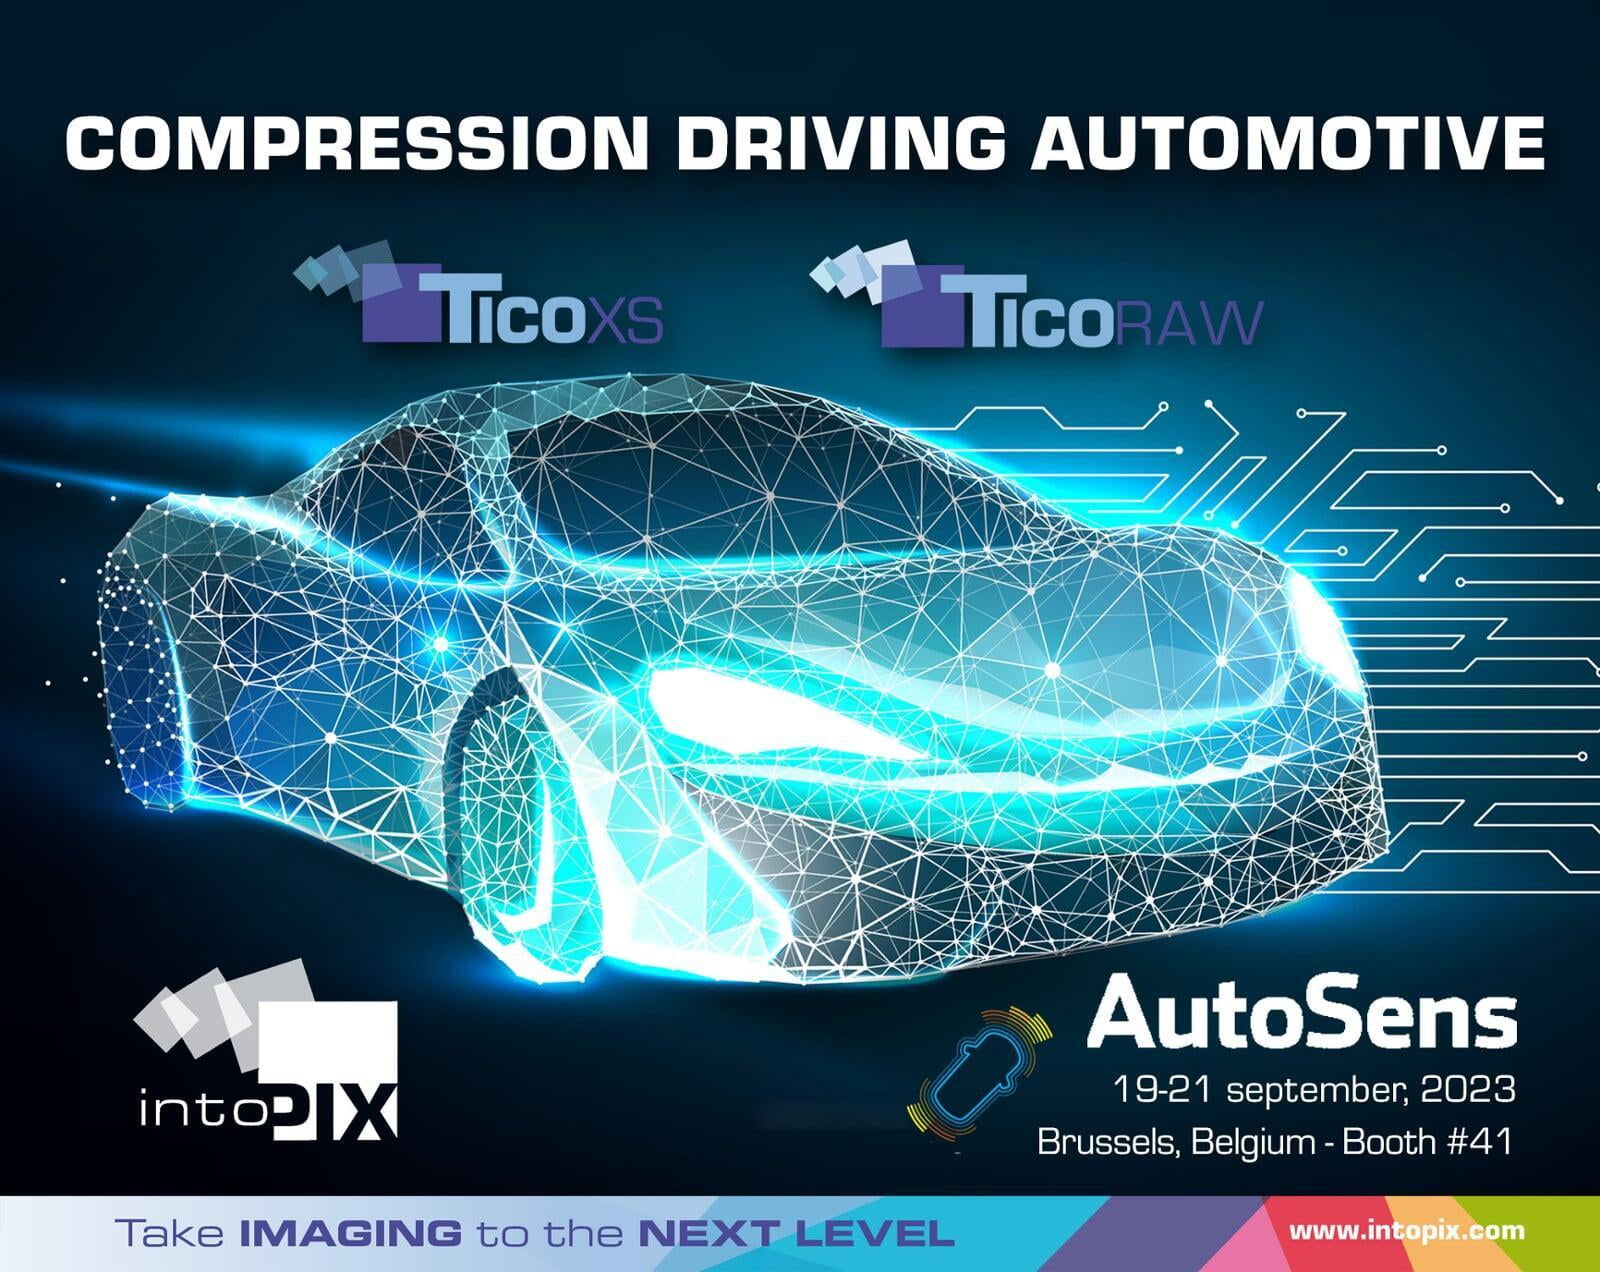 intoPIX는 AutoSens 2023에서 자동차 혁신을 주도하는 새로운 경량 비디오 압축 표준과 기술을 선보입니다.